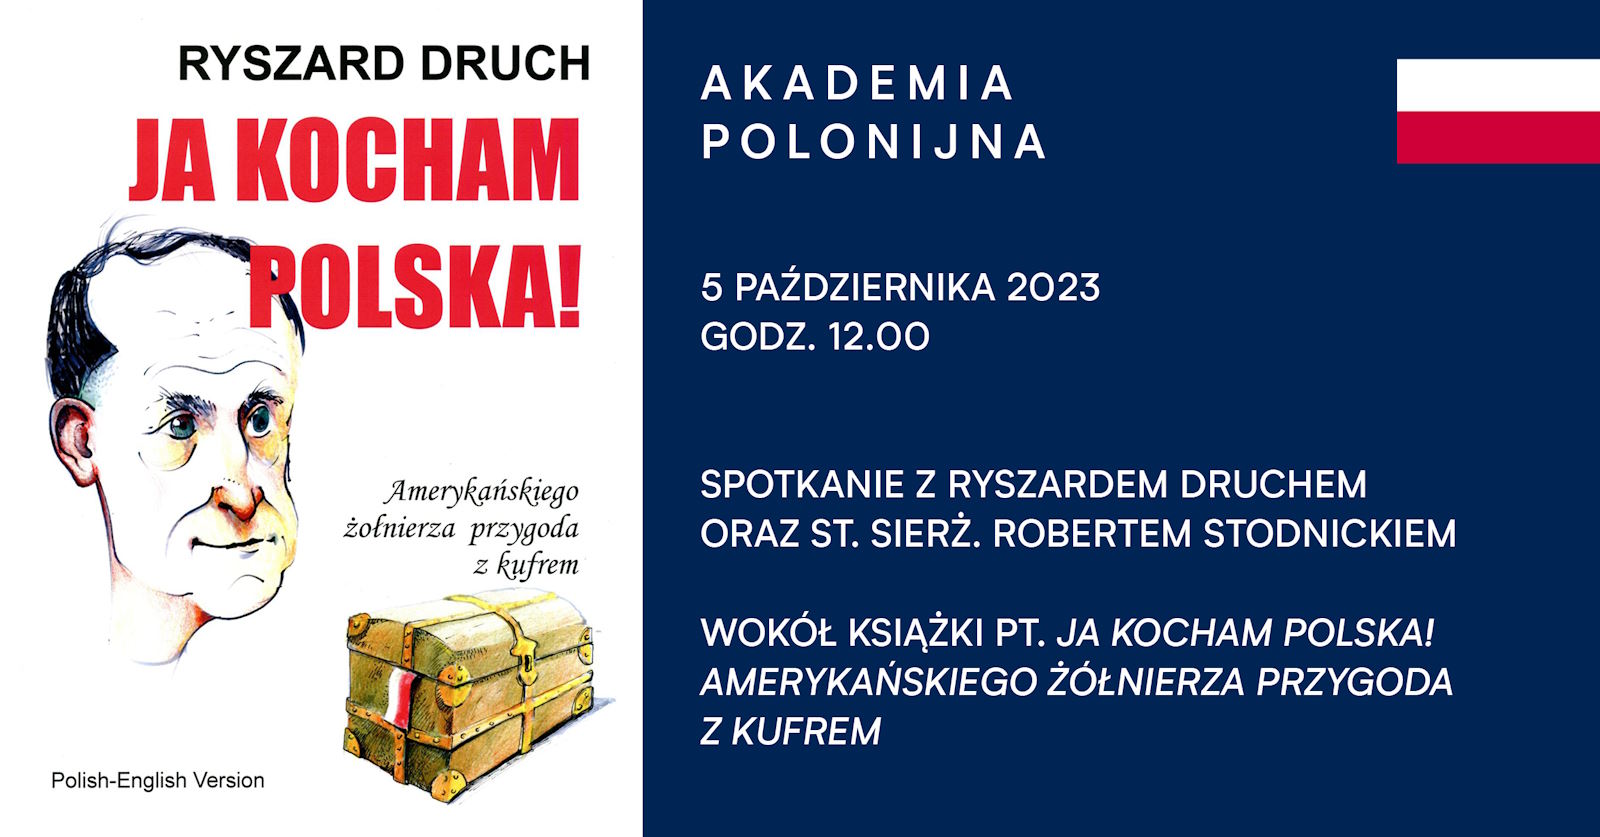 baner Akademia Polonijna druch